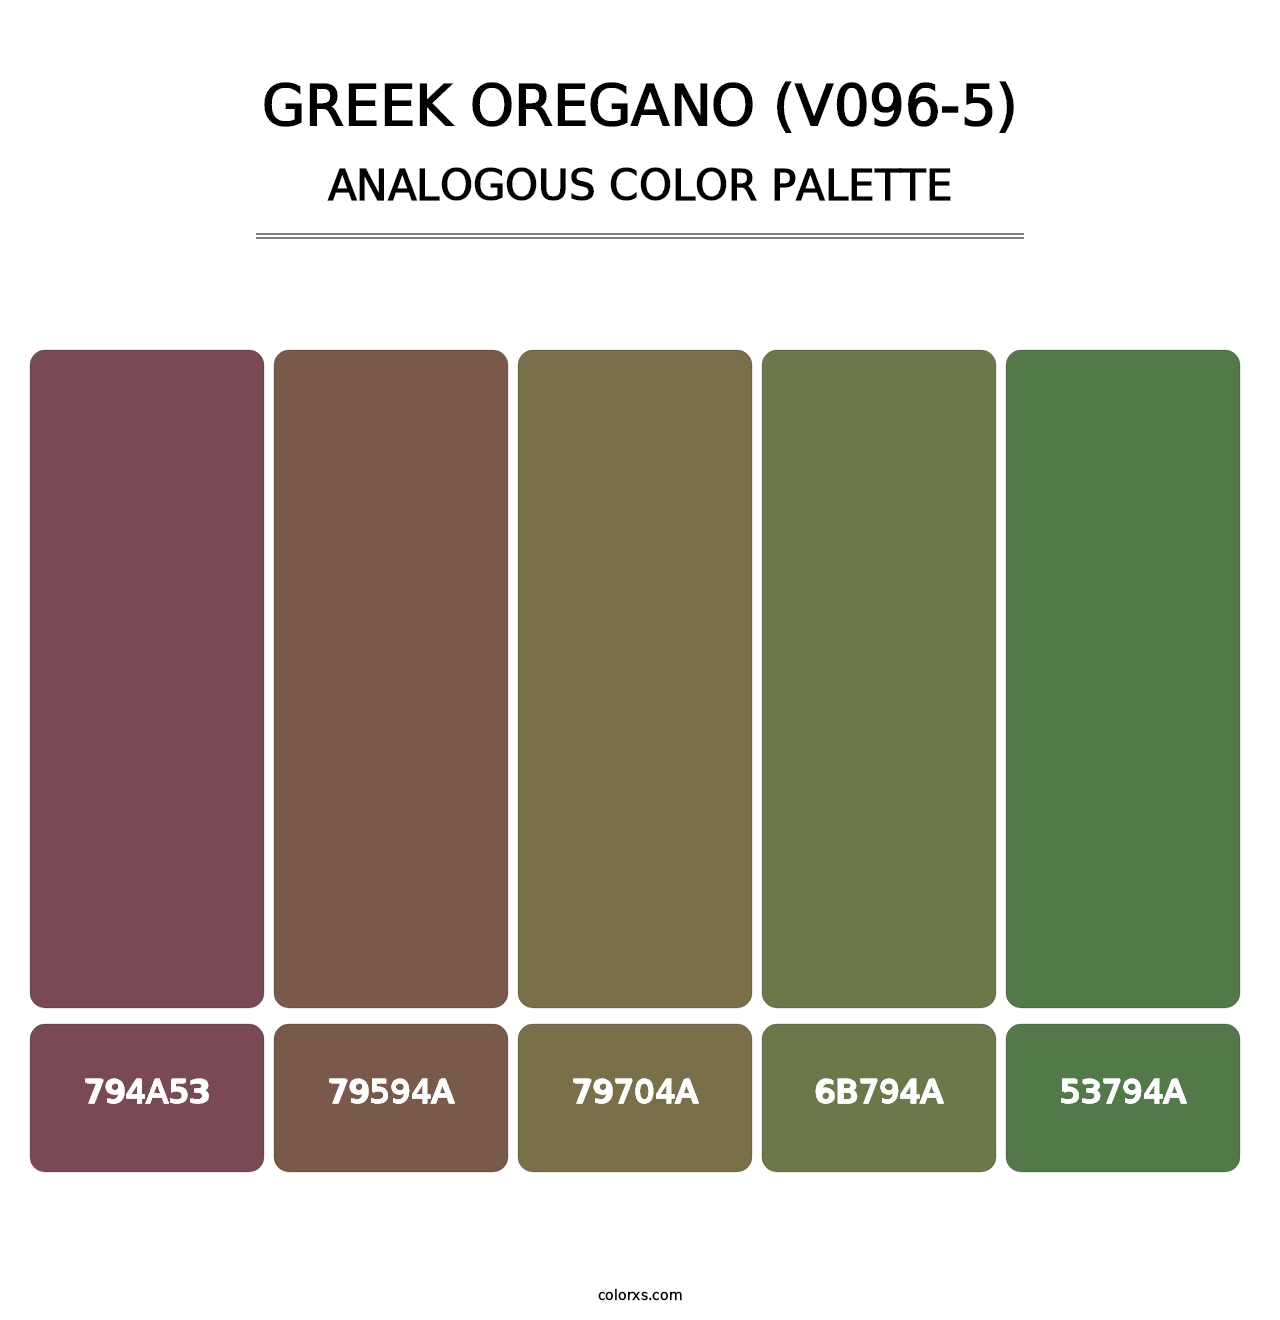 Greek Oregano (V096-5) - Analogous Color Palette